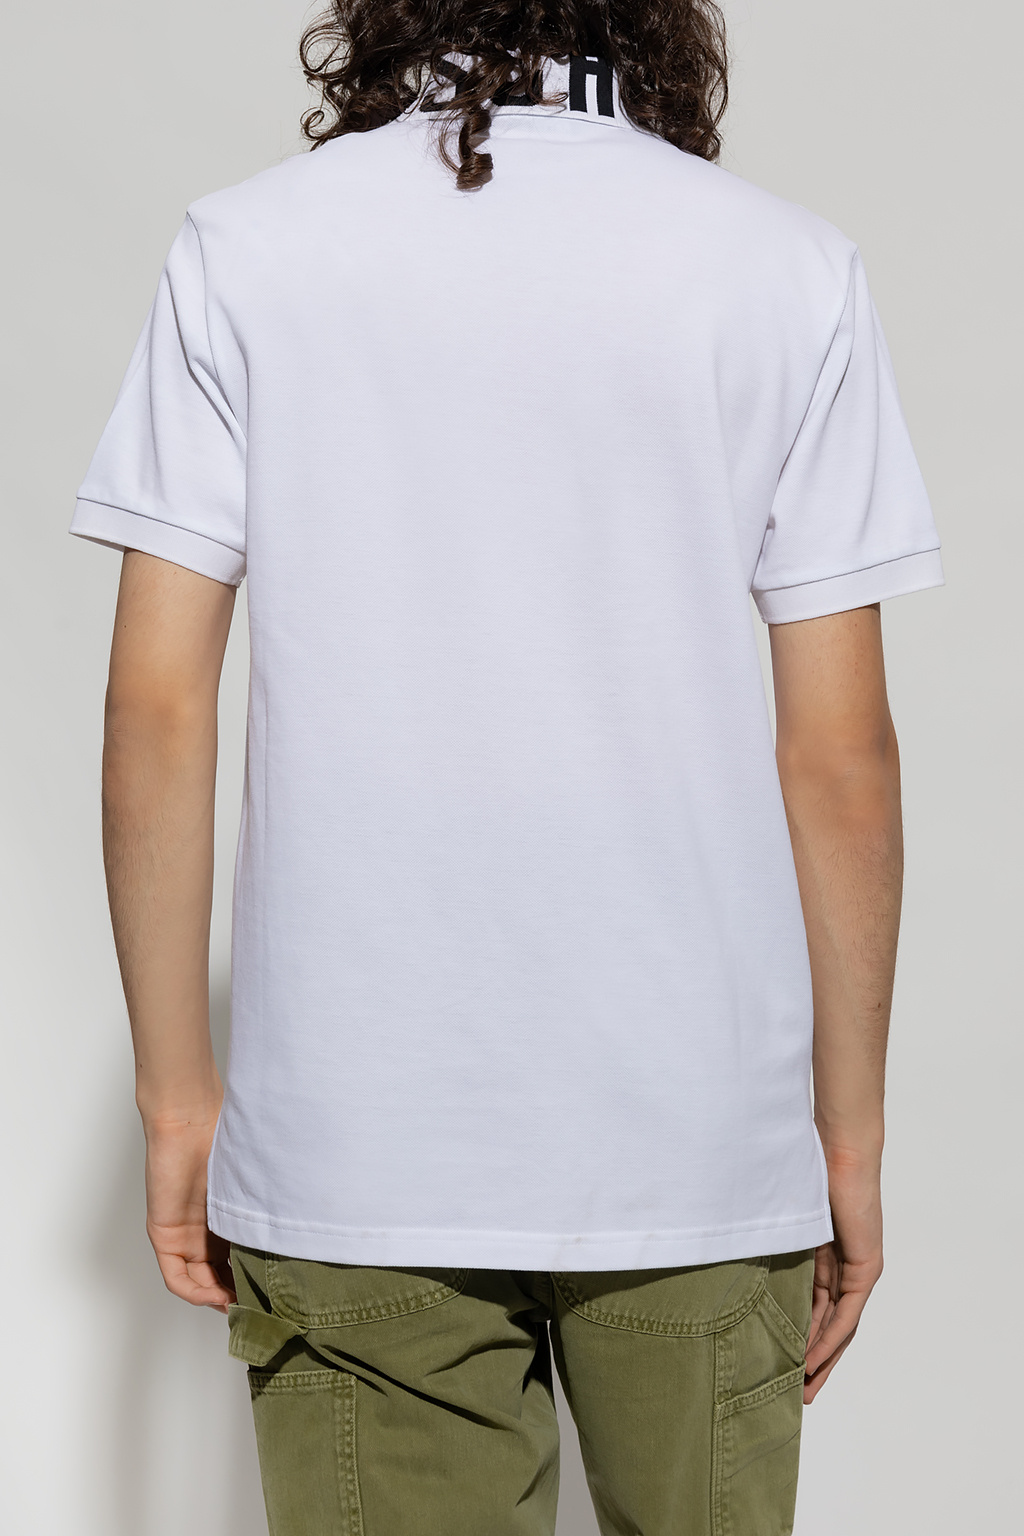 Moschino Kids polo-shirts caps storage accessories T Shirts